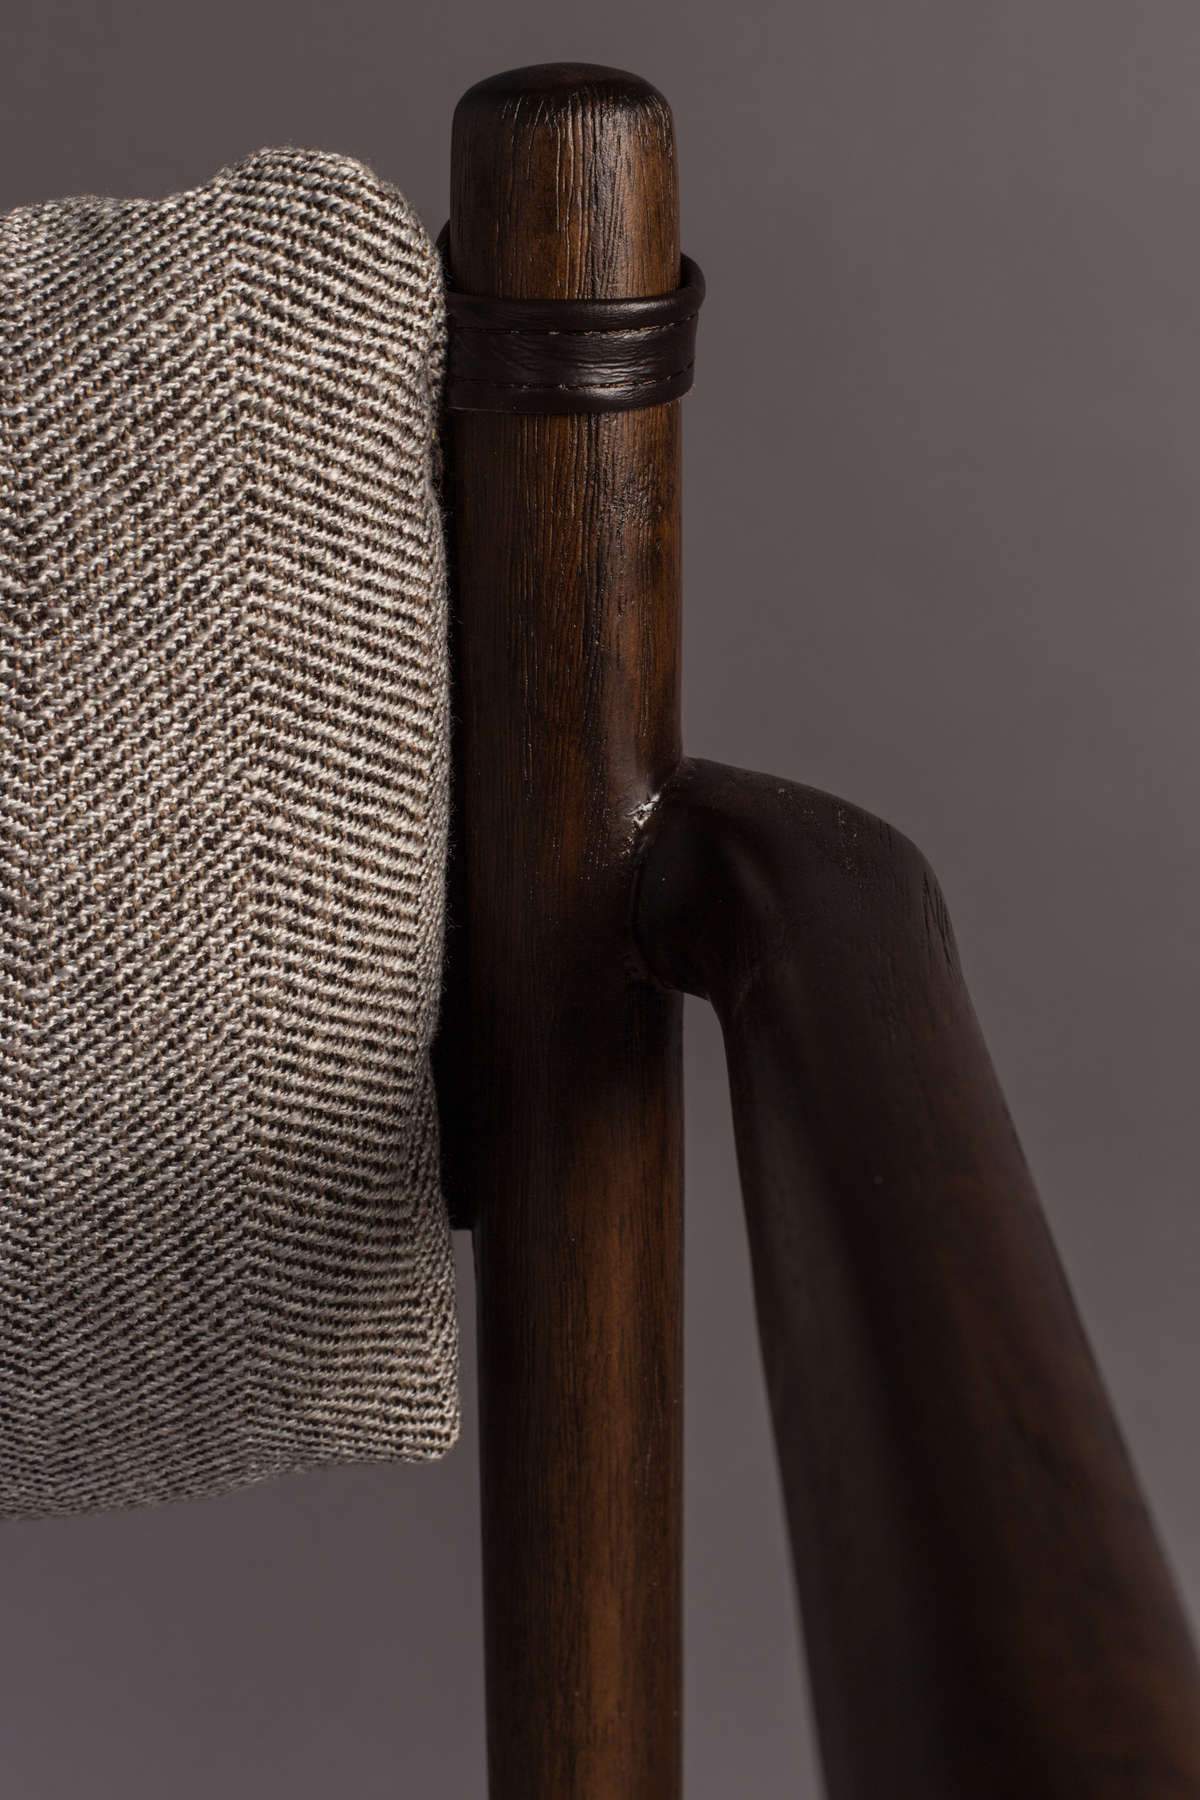 TORRANCE chair with armrests beige, Dutchbone, Eye on Design